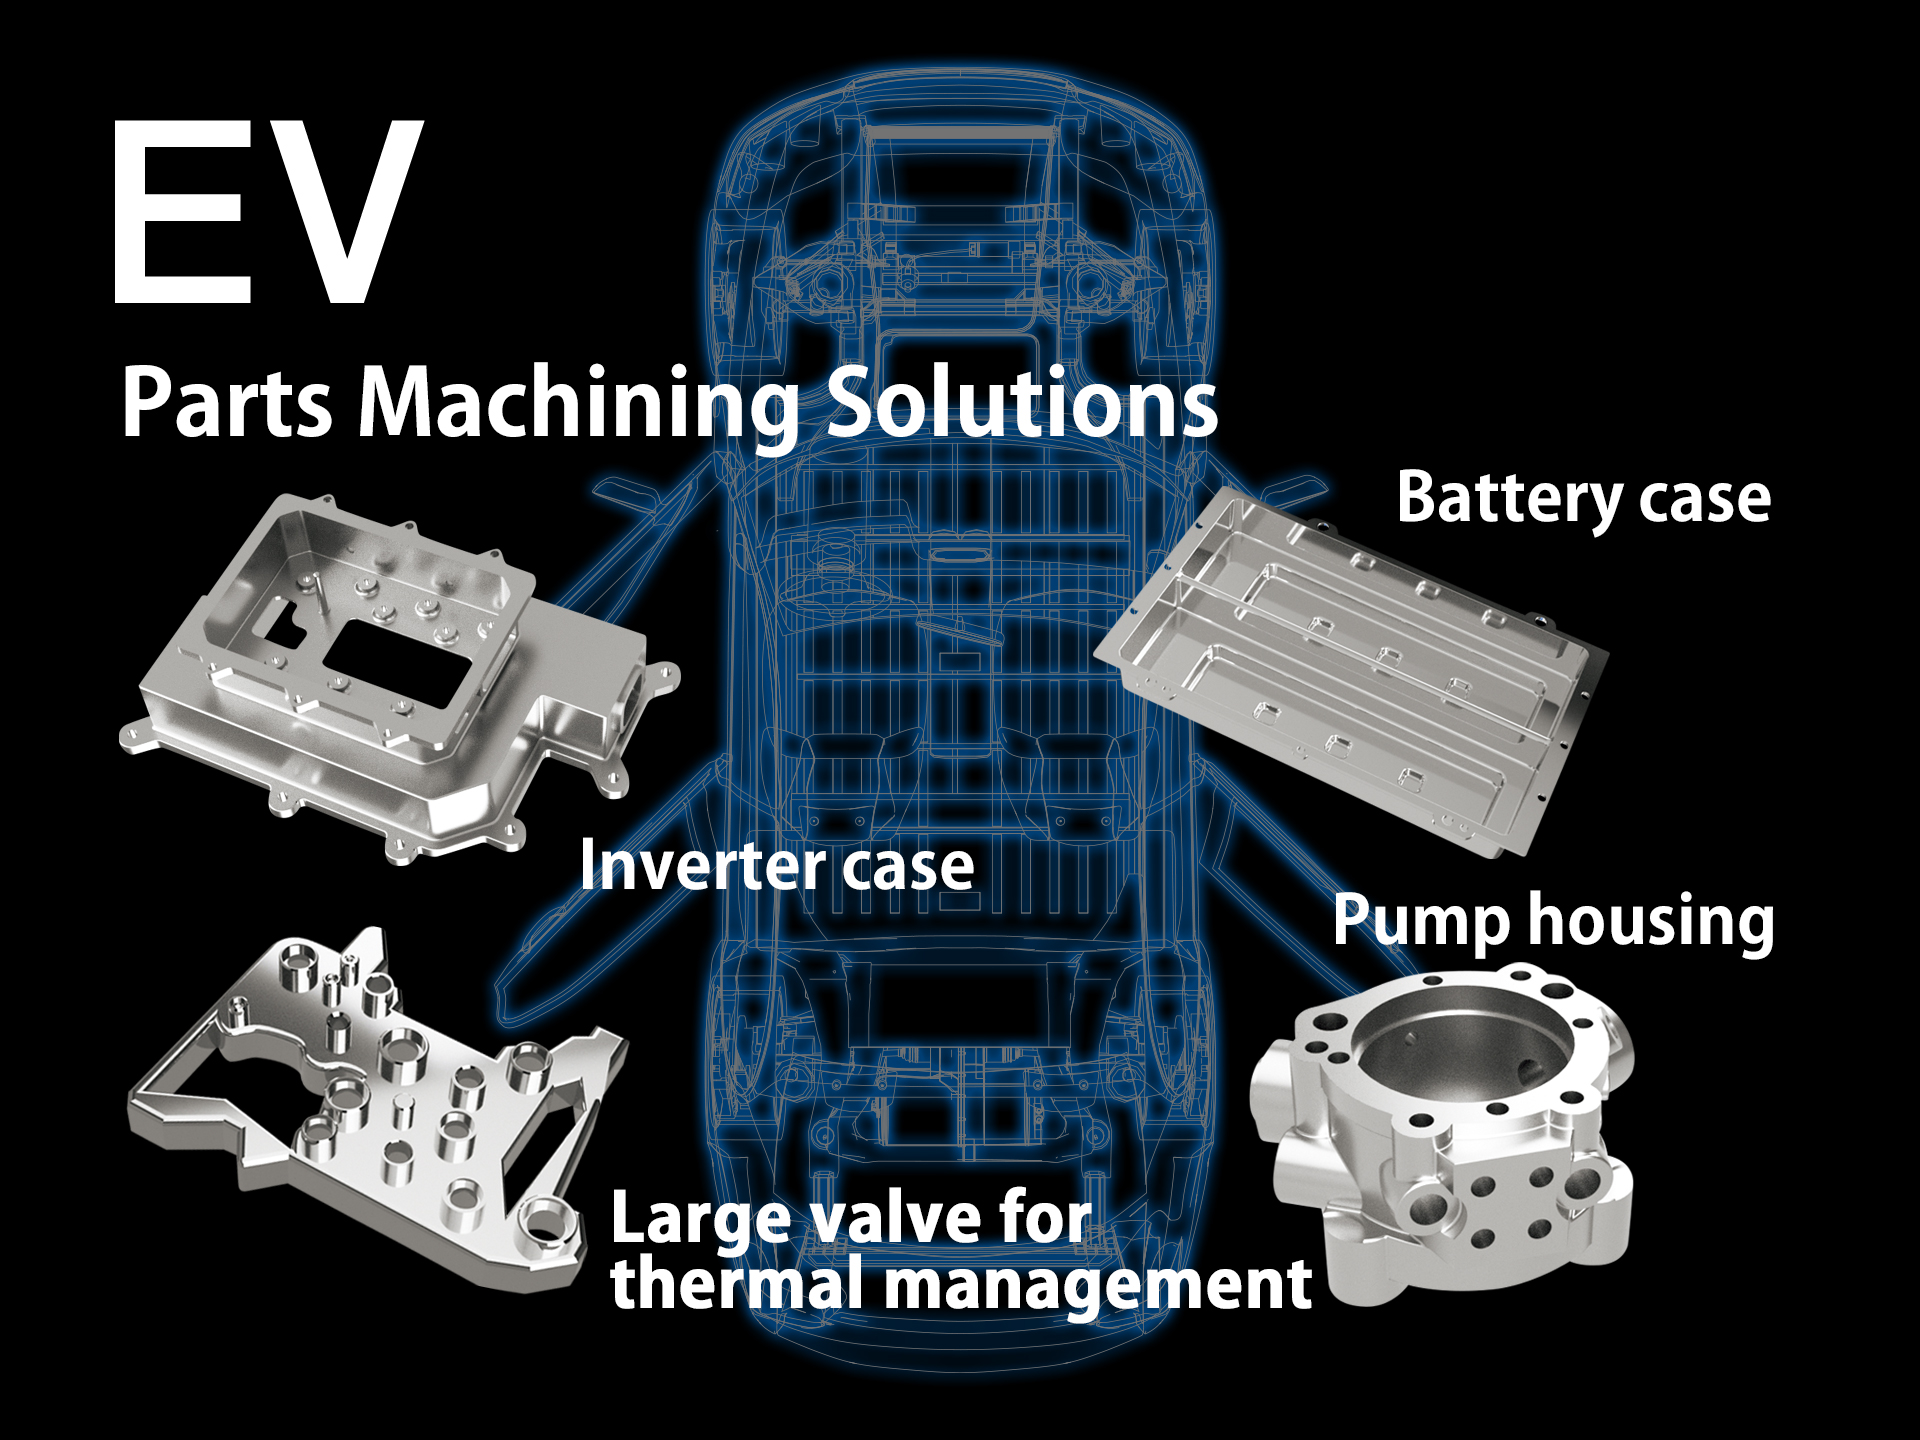 EV Parts Machining Solutions